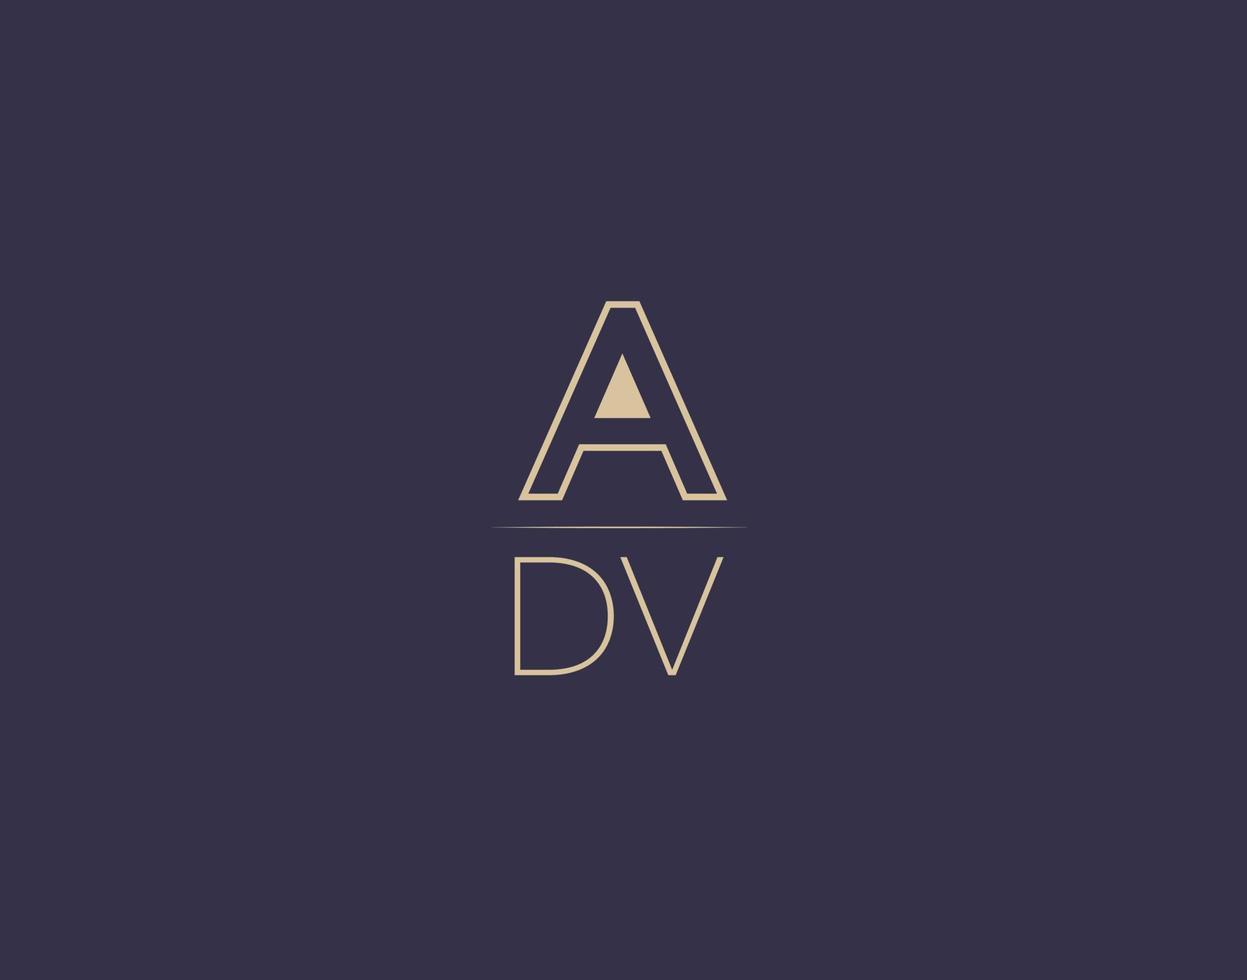 ADV letter logo design modern minimalist vector images